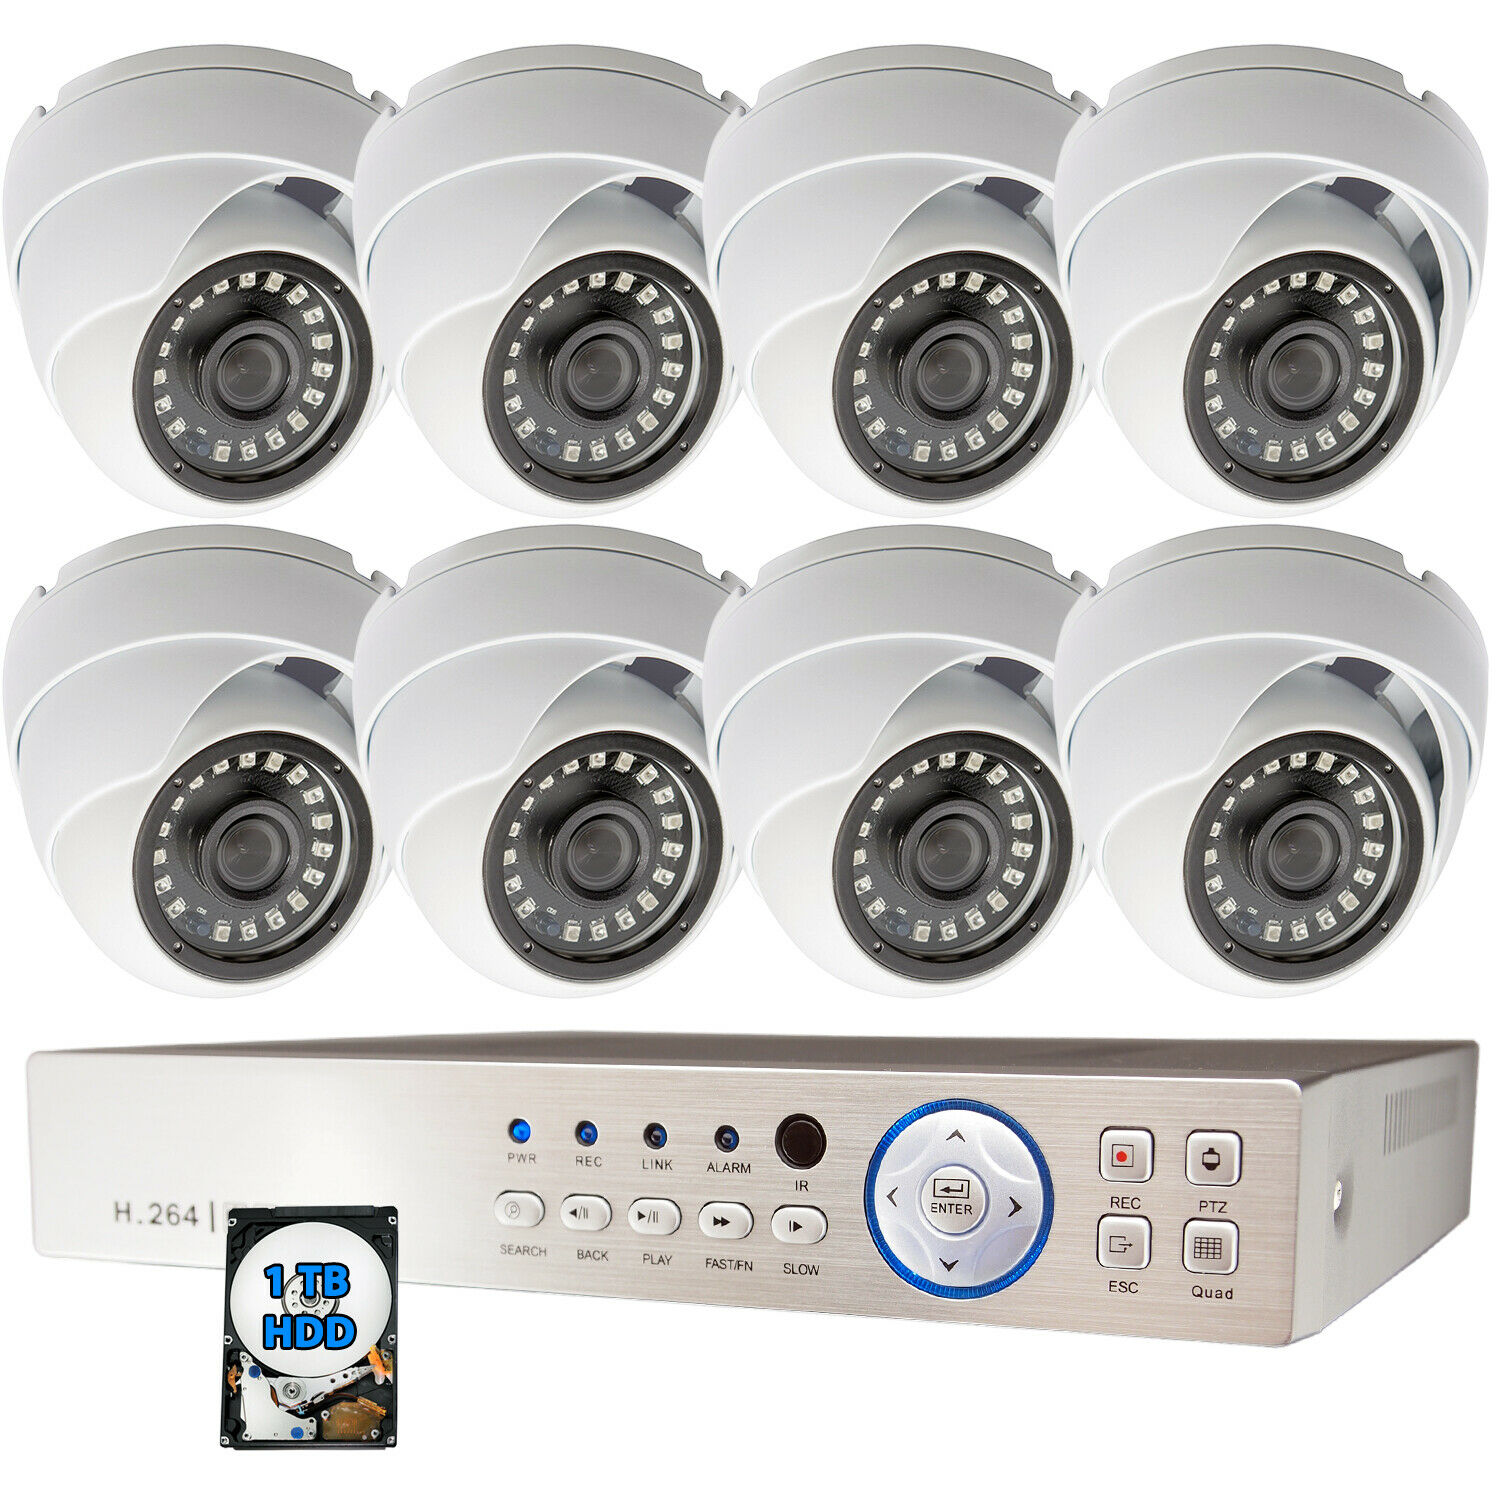 8 Channel Cctv Security Camera System 1tb Storage Indoor Outdoor Dome Cameras